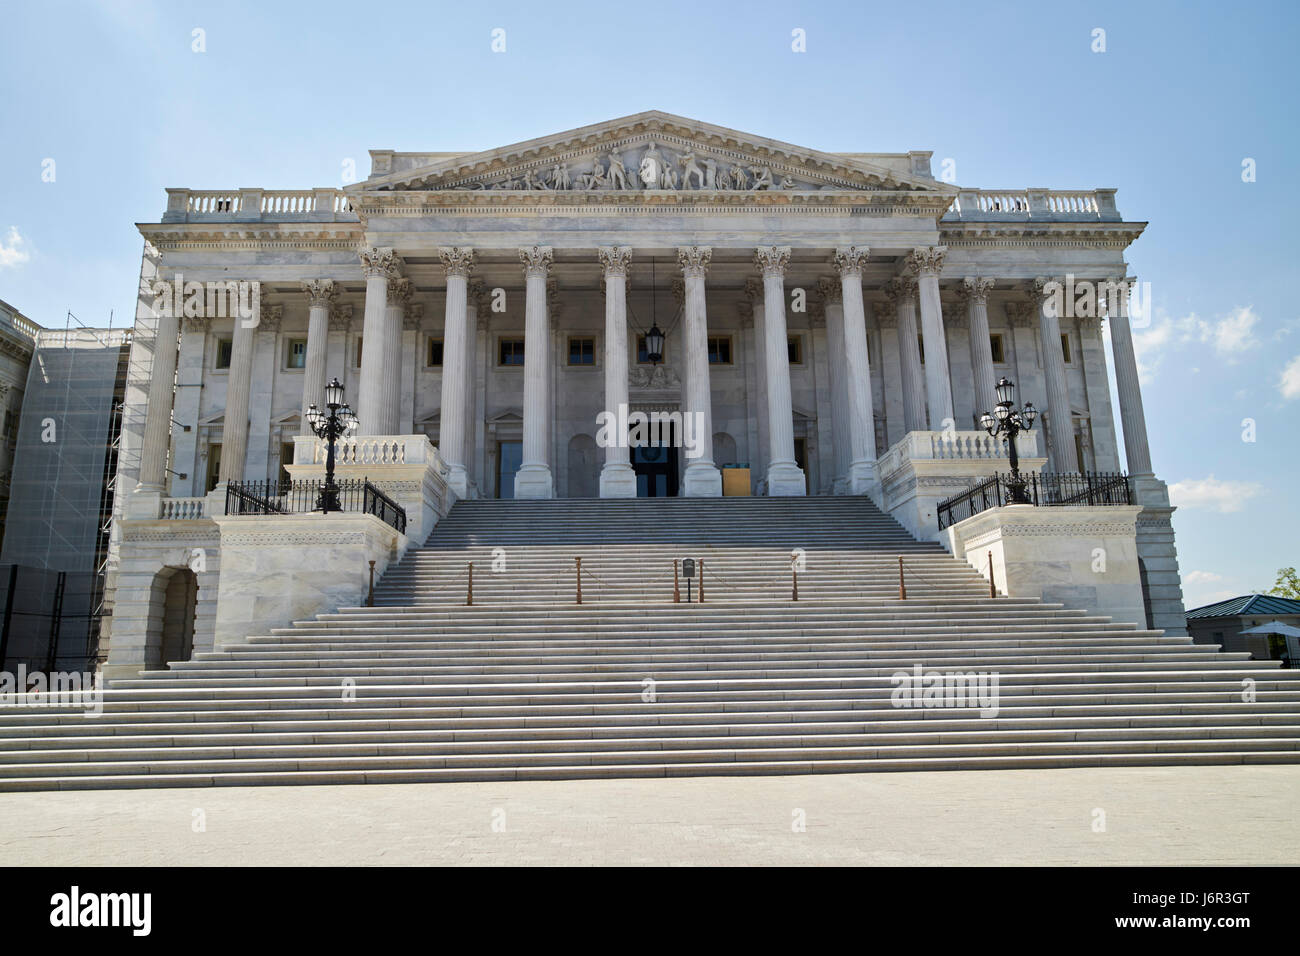 senate chamber building of the United States Capitol building Washington DC USA Stock Photo